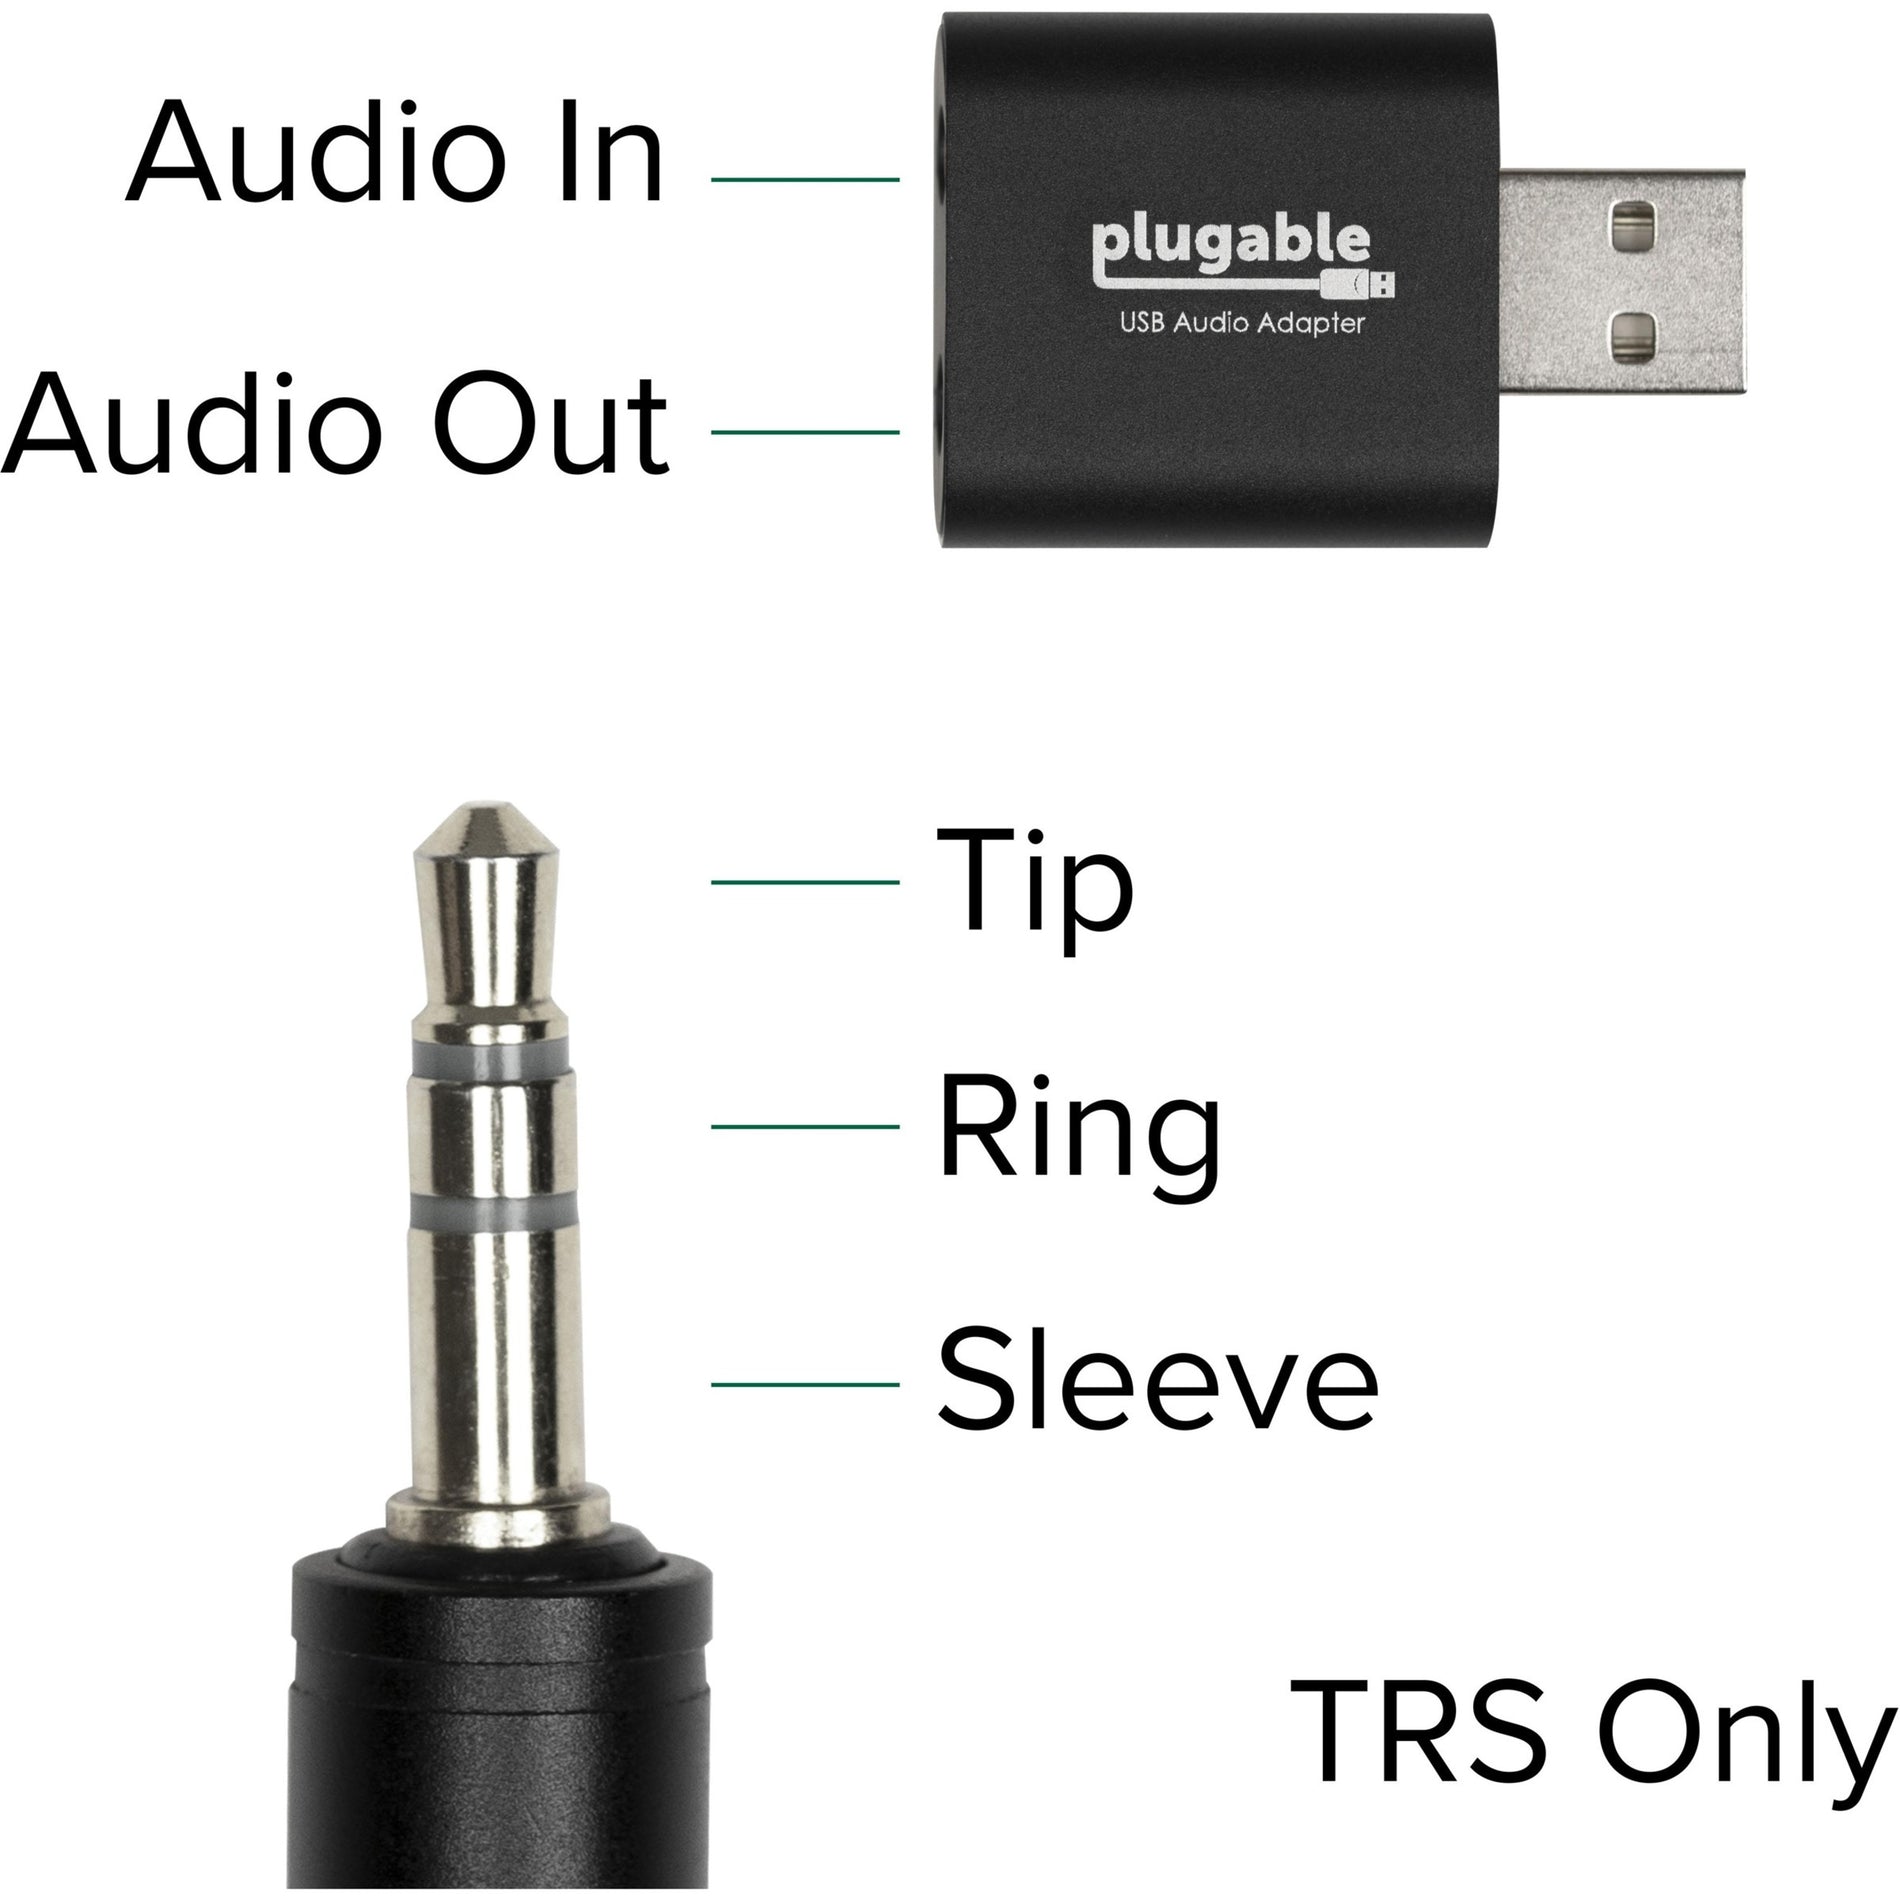 Plugable USB-AUDIO USB Audio Adapter, 3.5mm Headphone + Microphone Jacks, Enhance Your Audio Experience